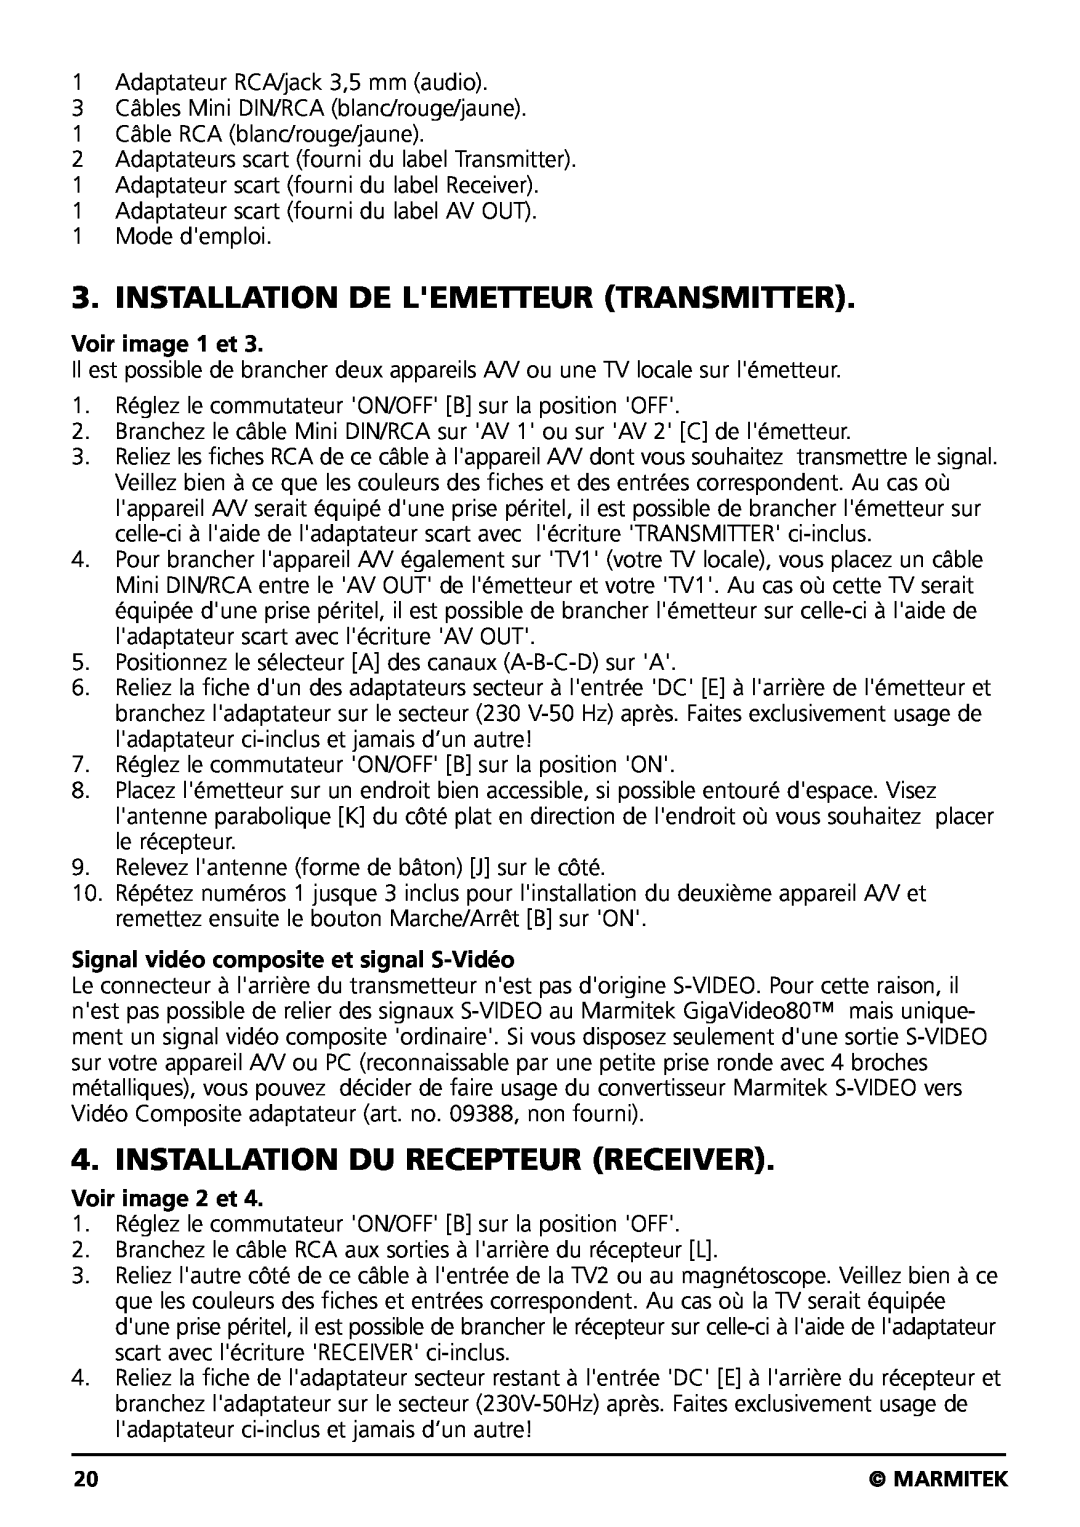 Marmitek GIGAVIDEO80 user manual Installation De Lemetteur Transmitter, Installation Du Recepteur Receiver, Voir image 1 et 